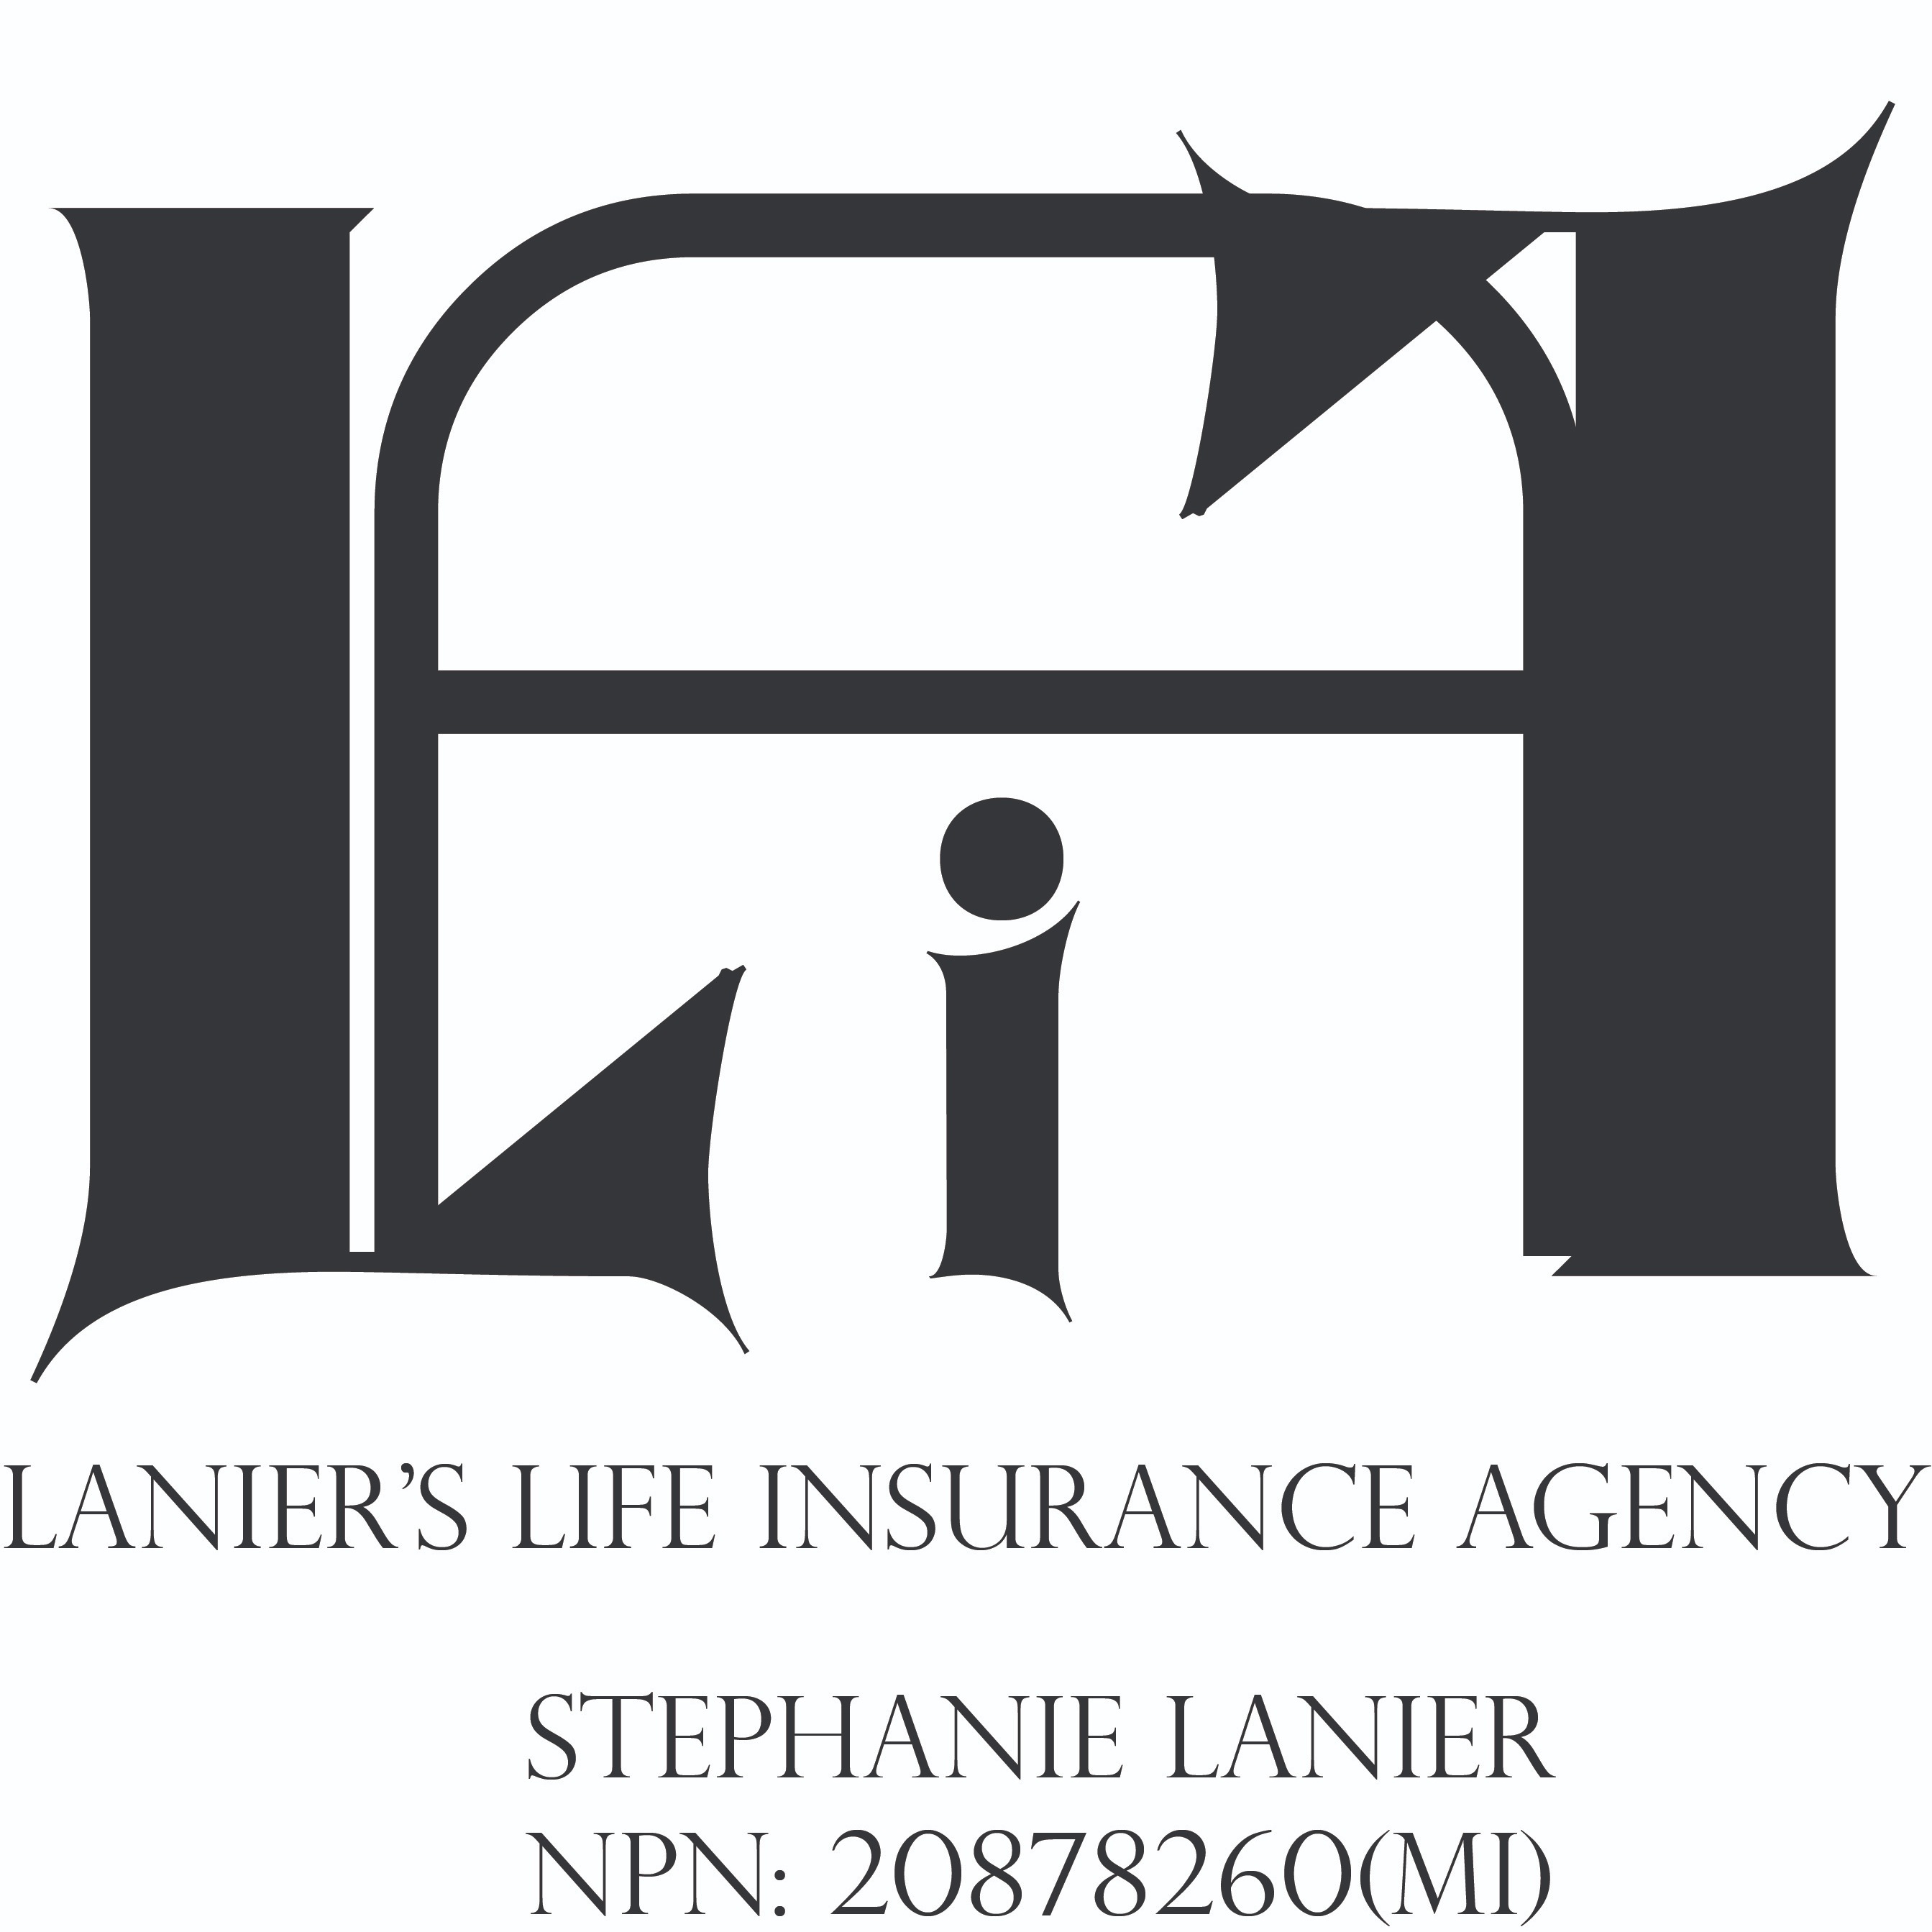 Image of Lanier's Life Insurance Agency